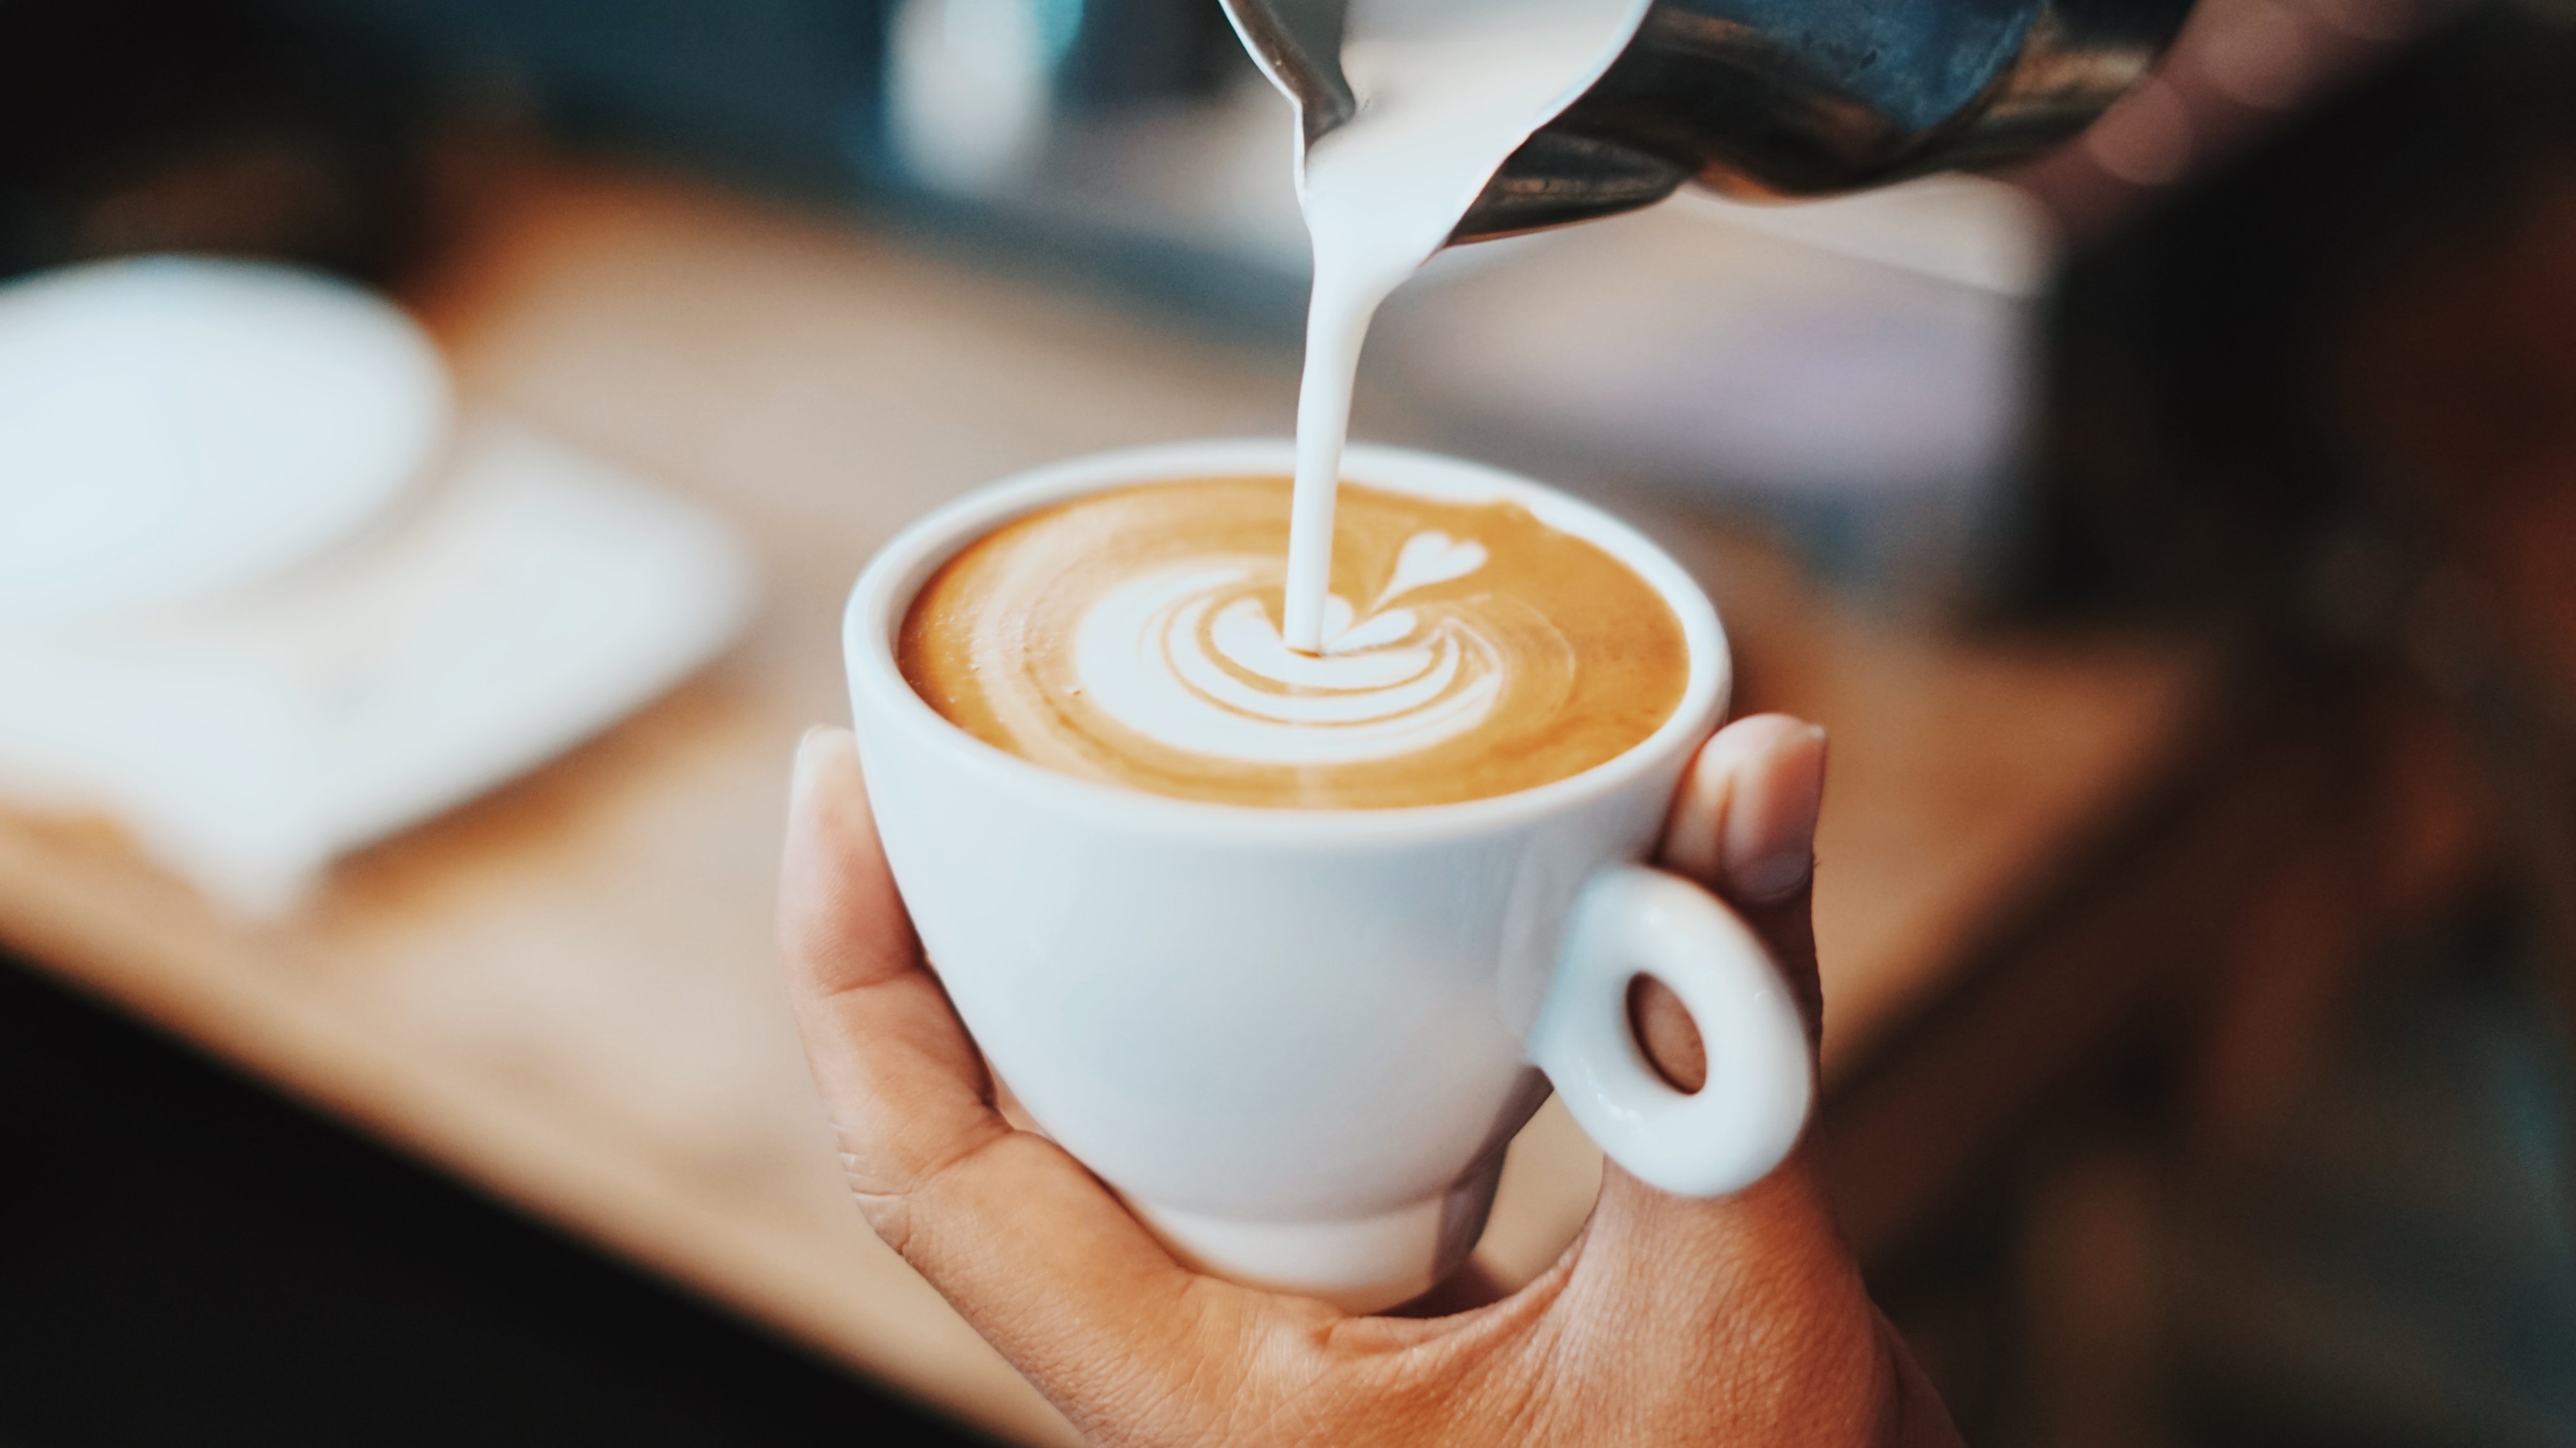 Latte art in a mug